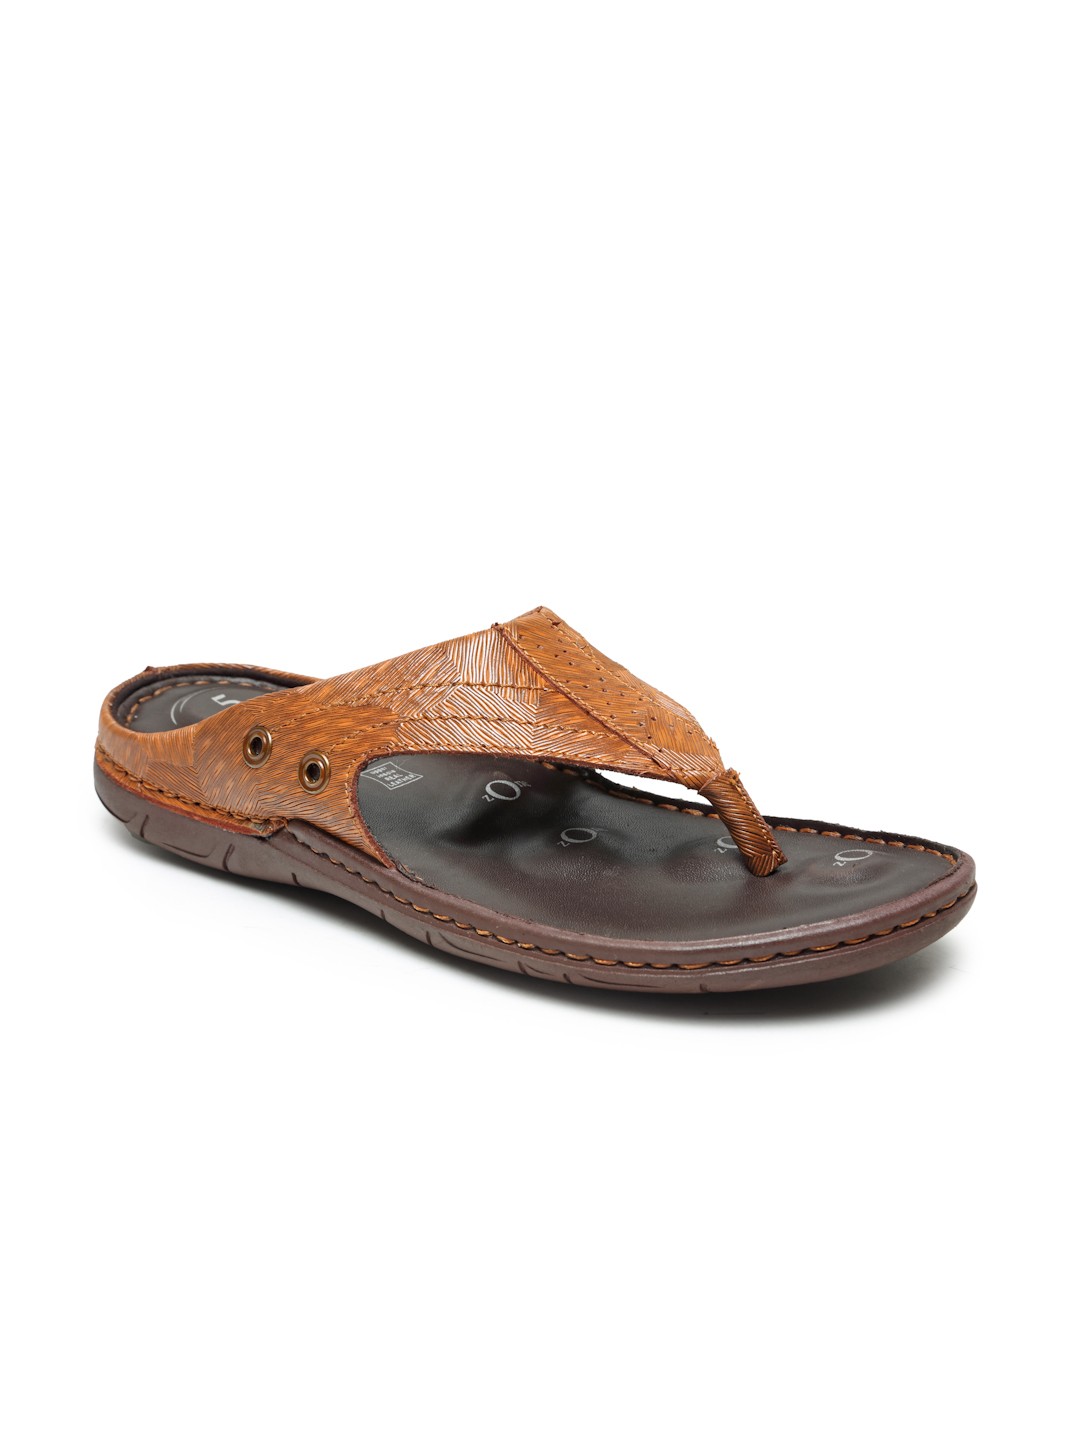 Buy Von Wellx Germany Comfort Men's Tan Slippers Alex Online in Jeddah